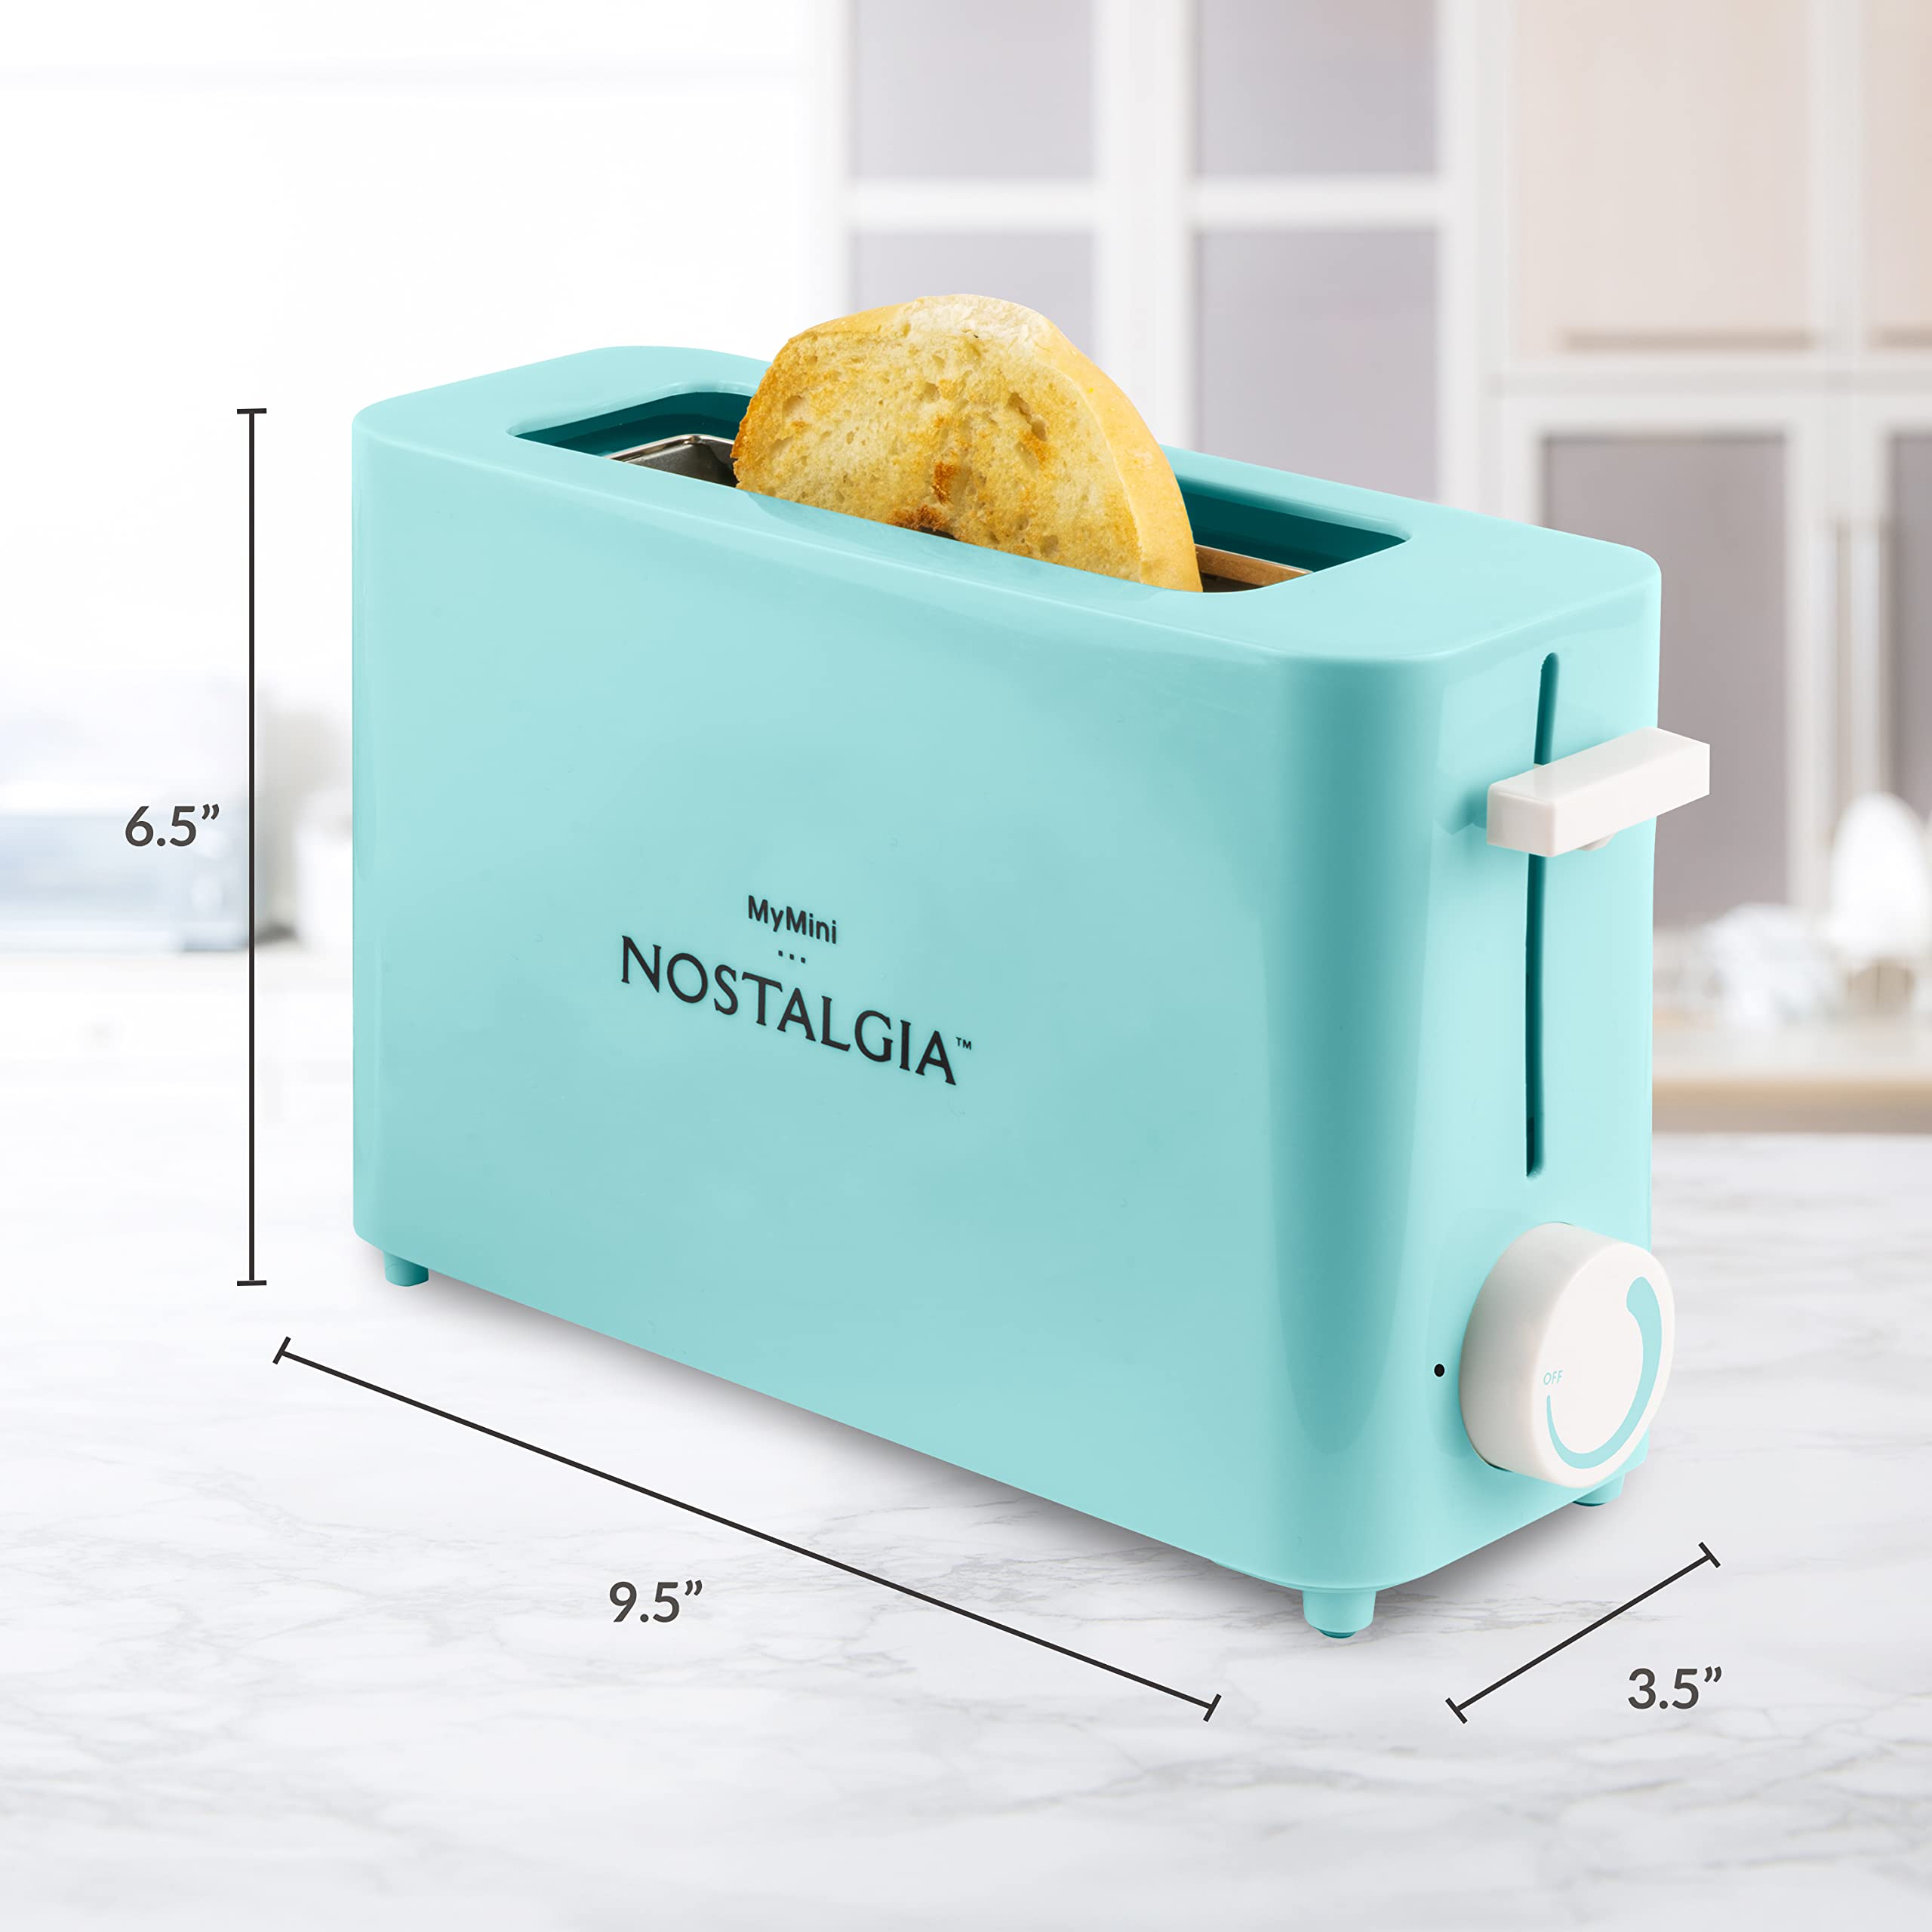 Nostalgia MyMini Single Slice Toaster w/ Adjustable Temperature & Removable Crumb Tray (Aqua) $9 + Free Shipping w/ Prime or on $35+